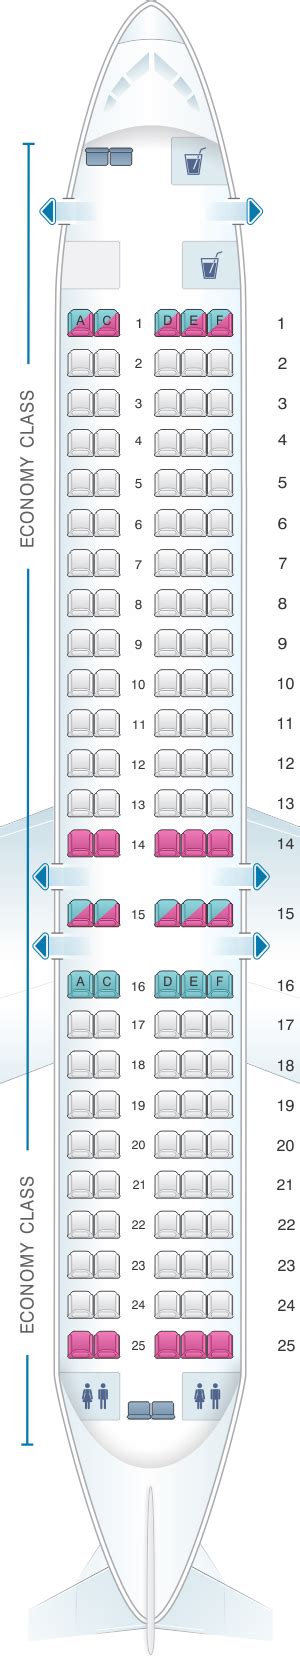 Seatguru Seat Map Qantas Seatguru 51 Off